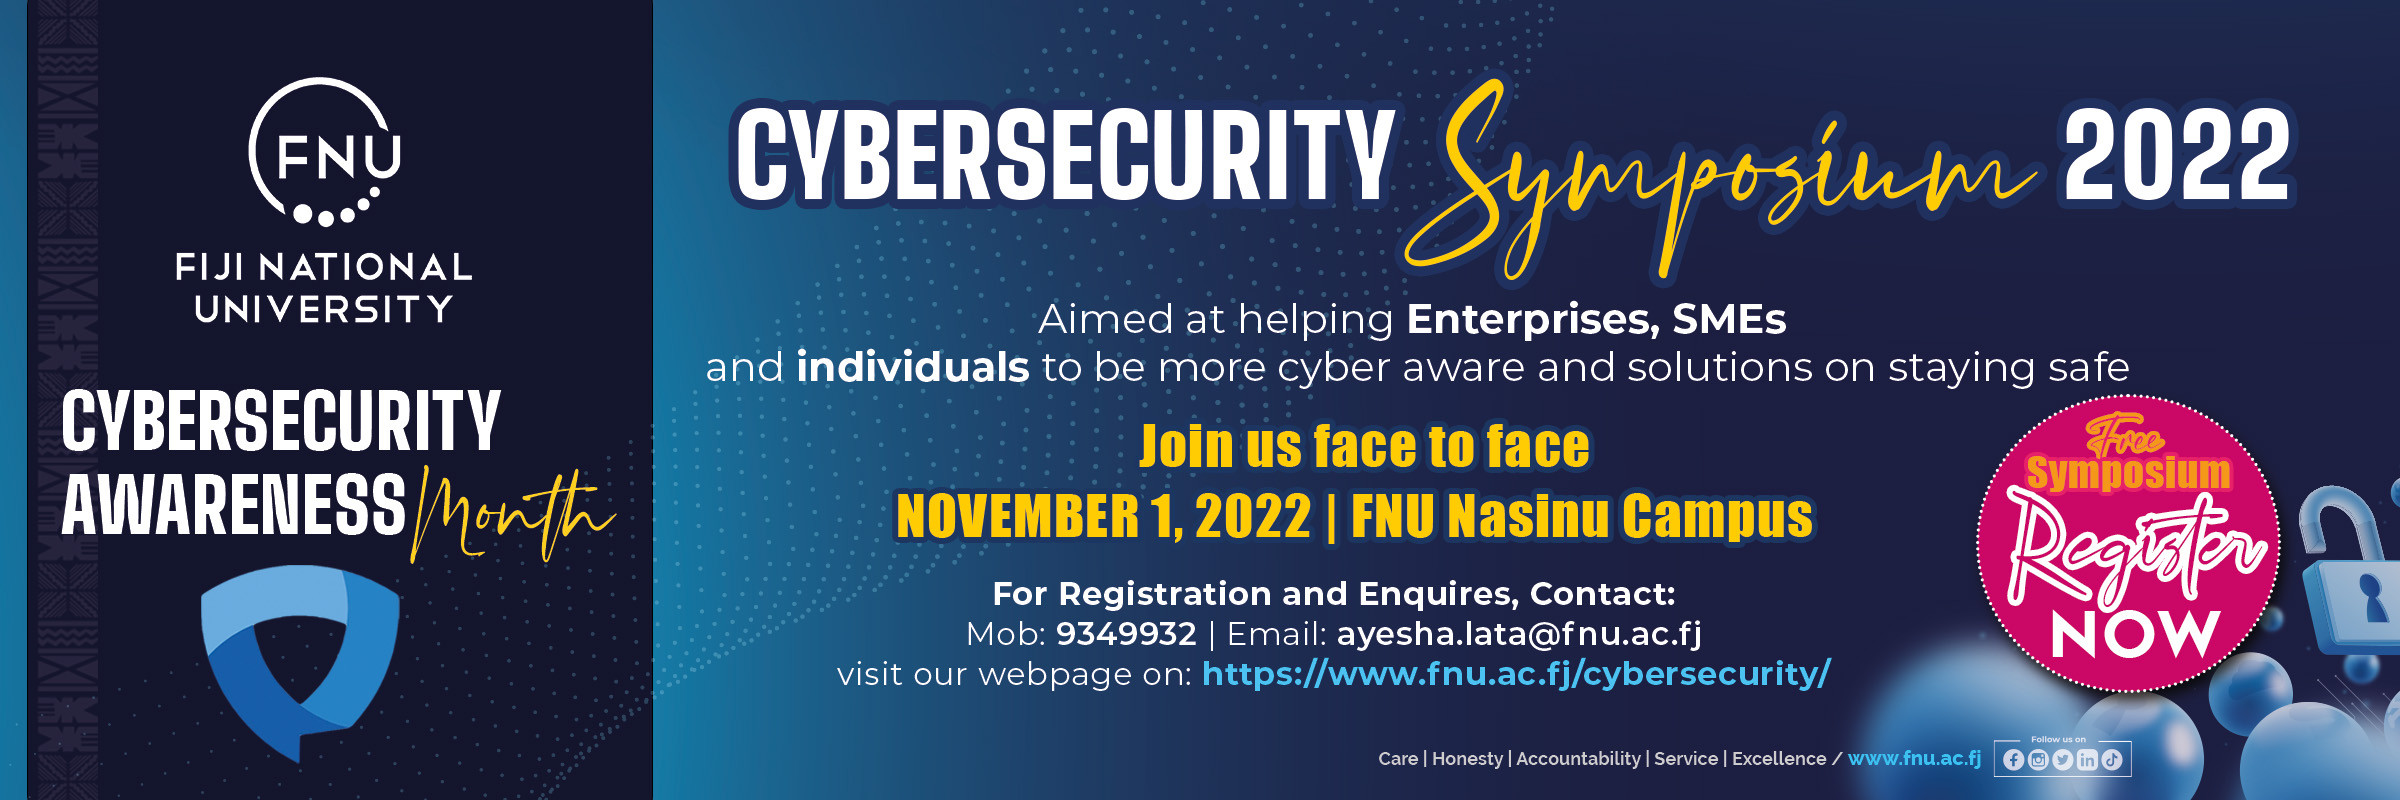 2022 Cyber Security Symposium